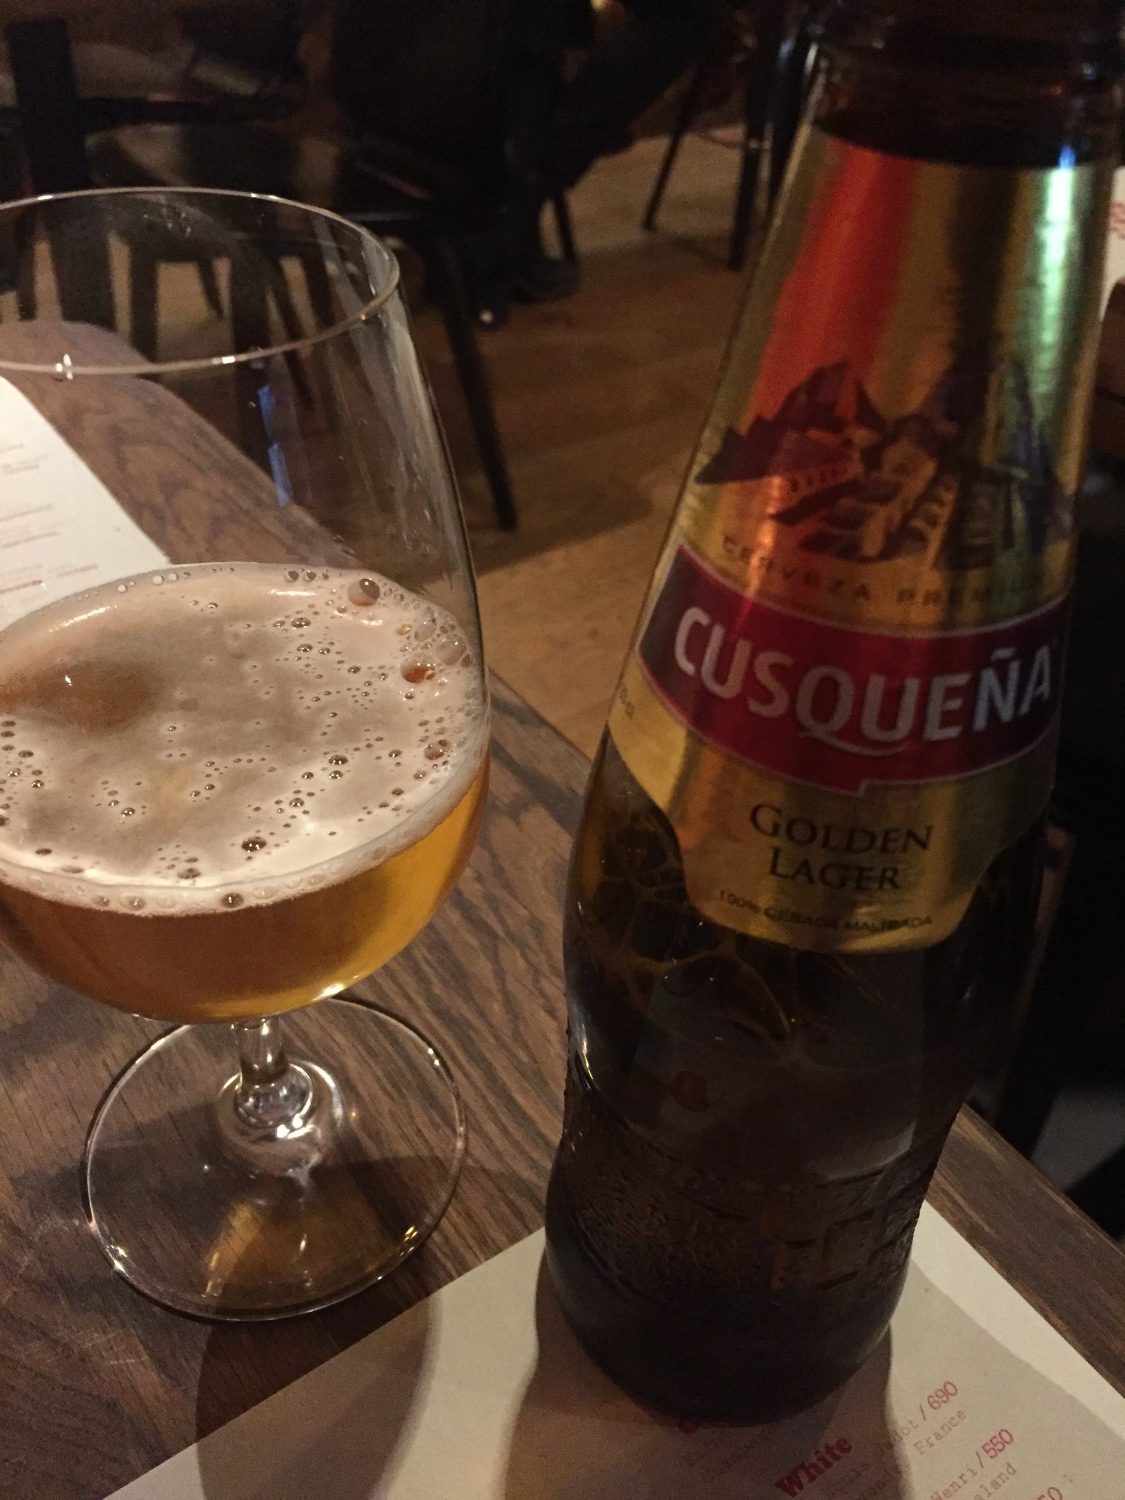 Cusqueña Gold: Golden lager from Perú 65 kr